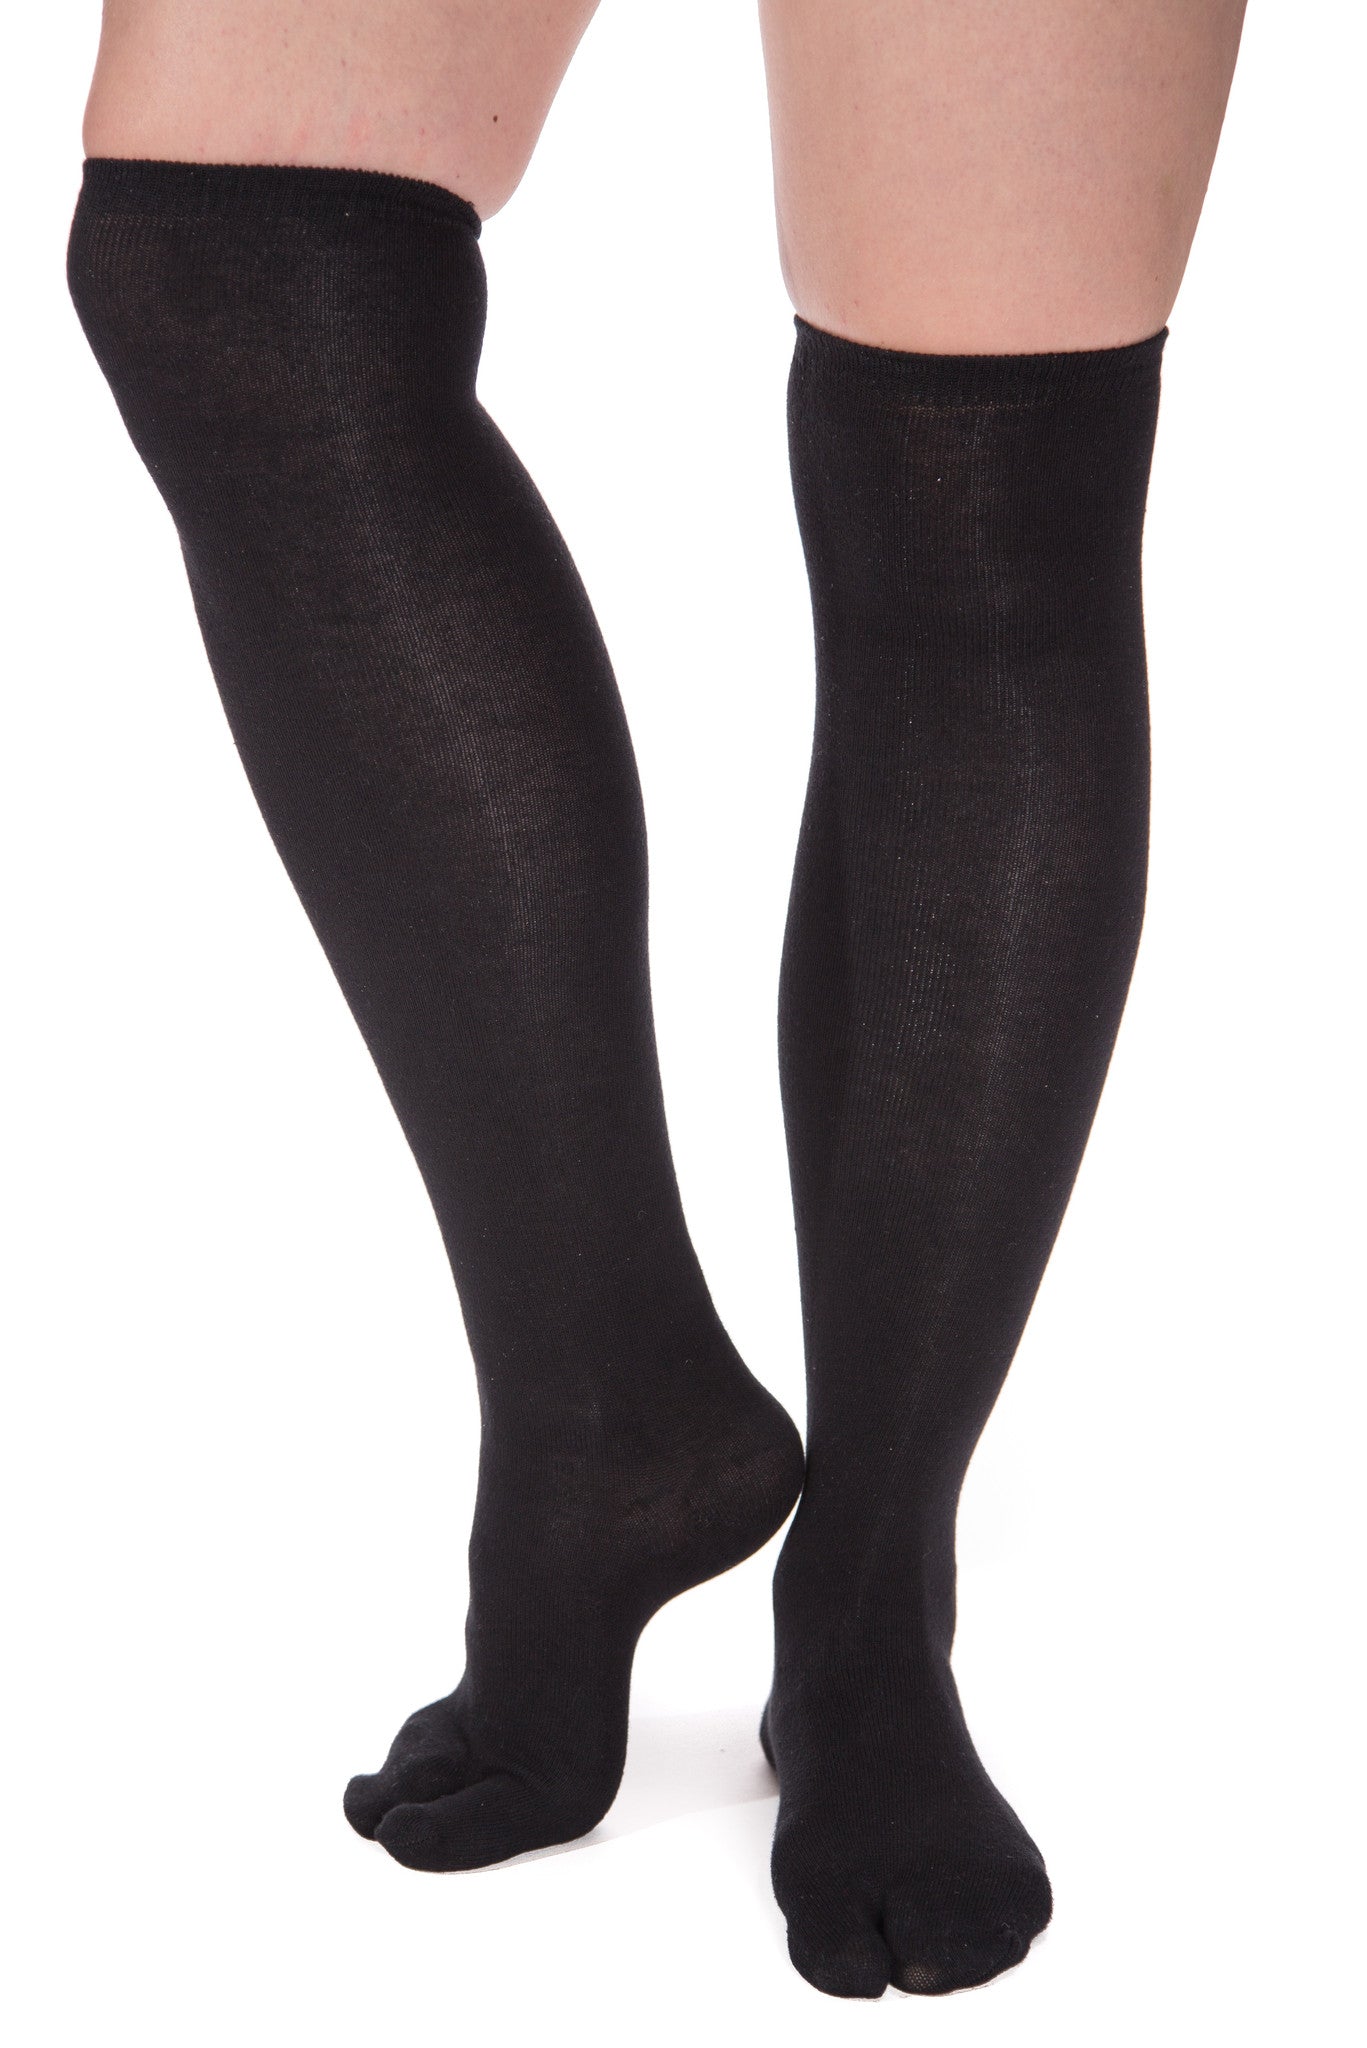 3 Pairs V-Toe Flip Flop Tabi Socks - Over The Knee Black Solid